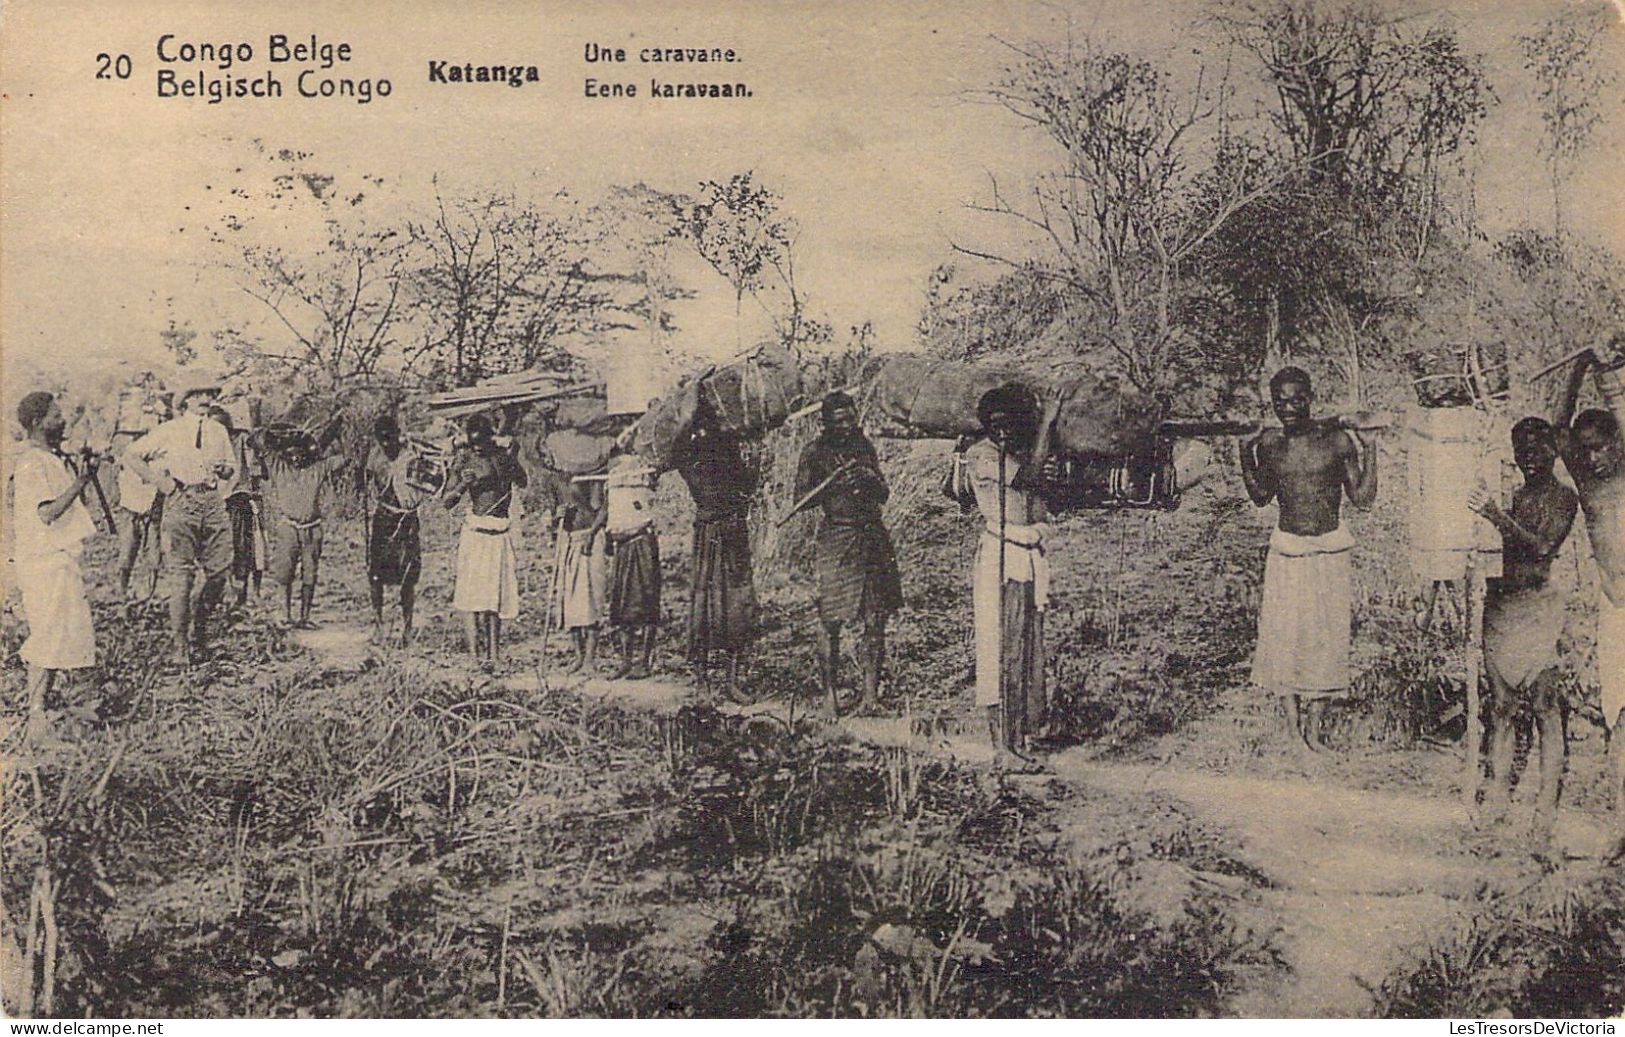 CONGO BELGE - KATANGA - Une Caravane - Carte Postale Ancienne - Congo Belge